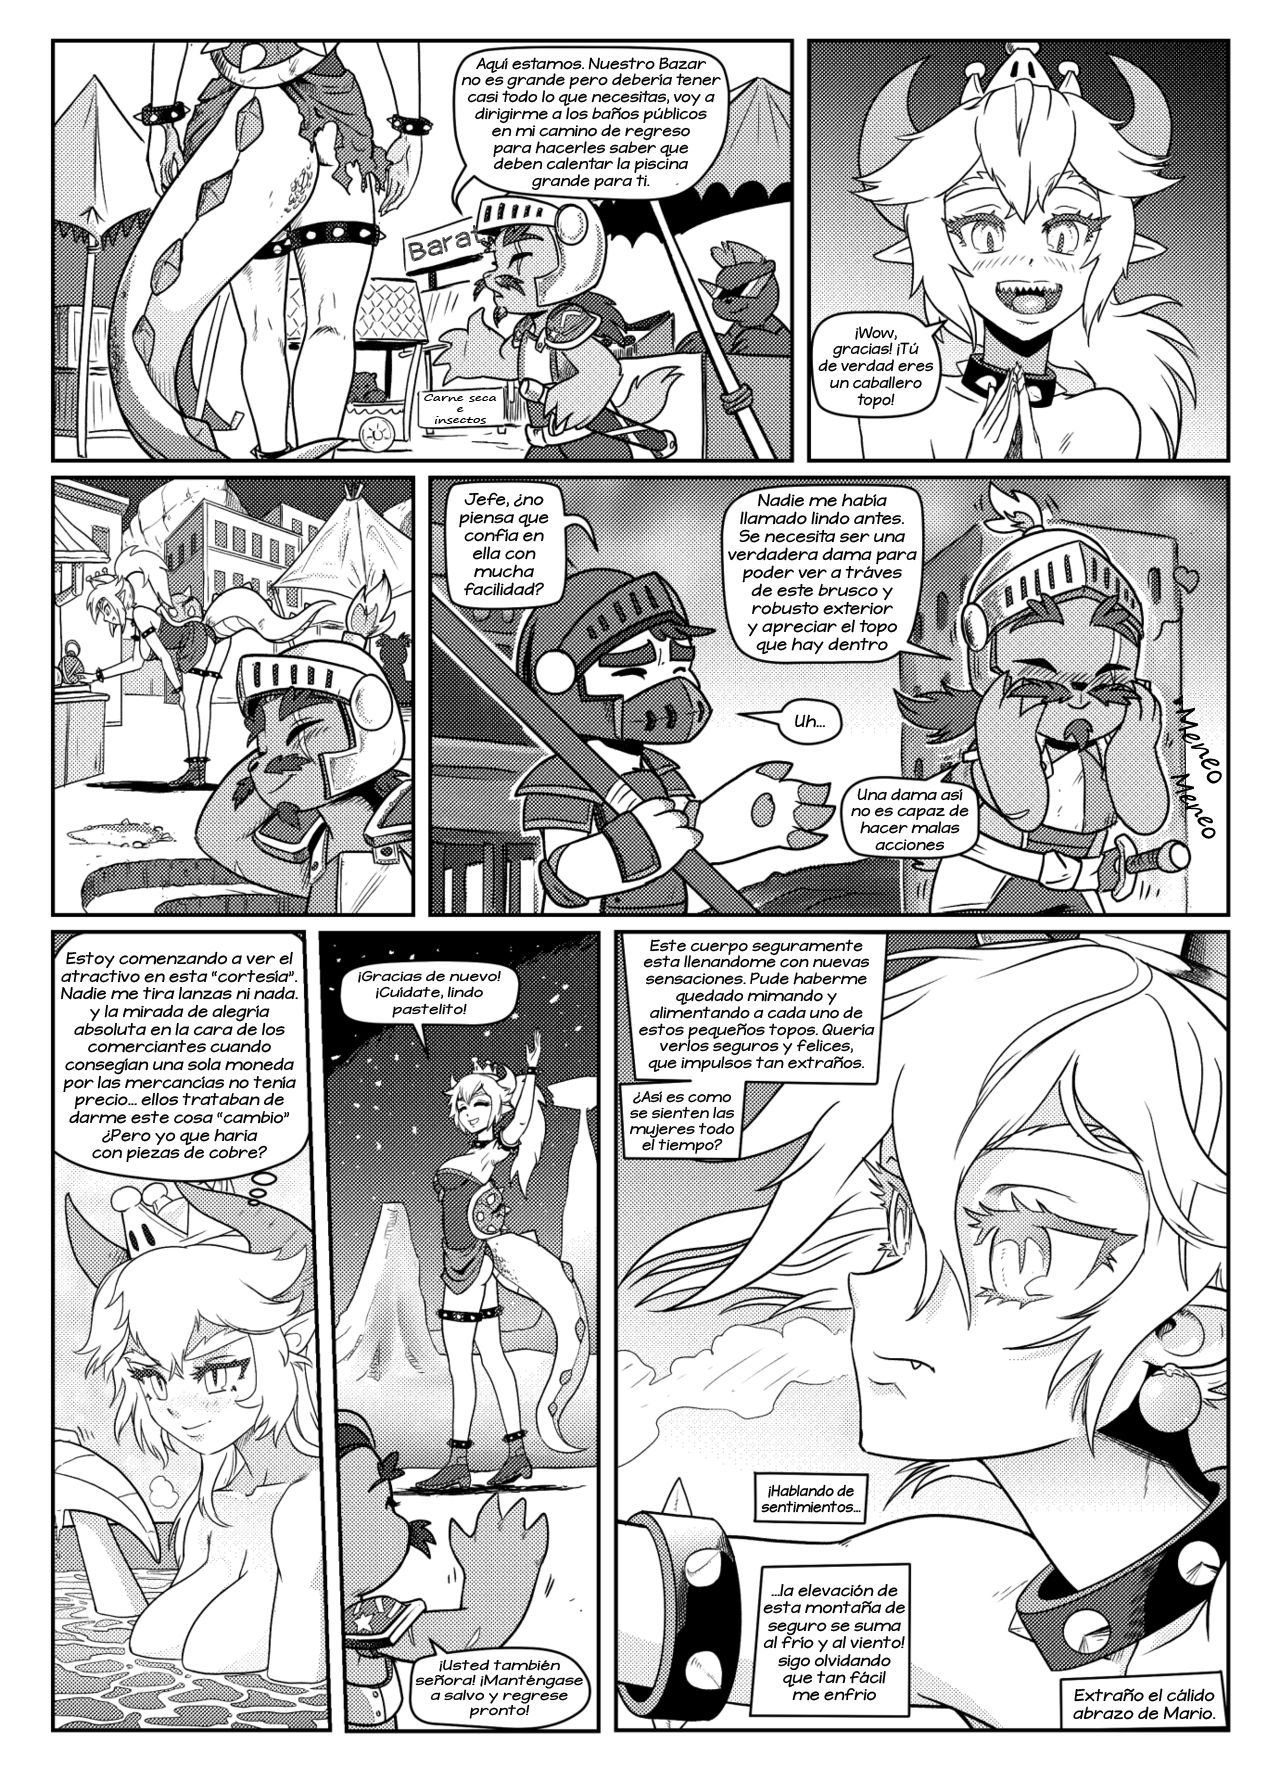 [Pencils] Bowsette comic (Mario Bros.) [Spanish] by Arkoniusx 17